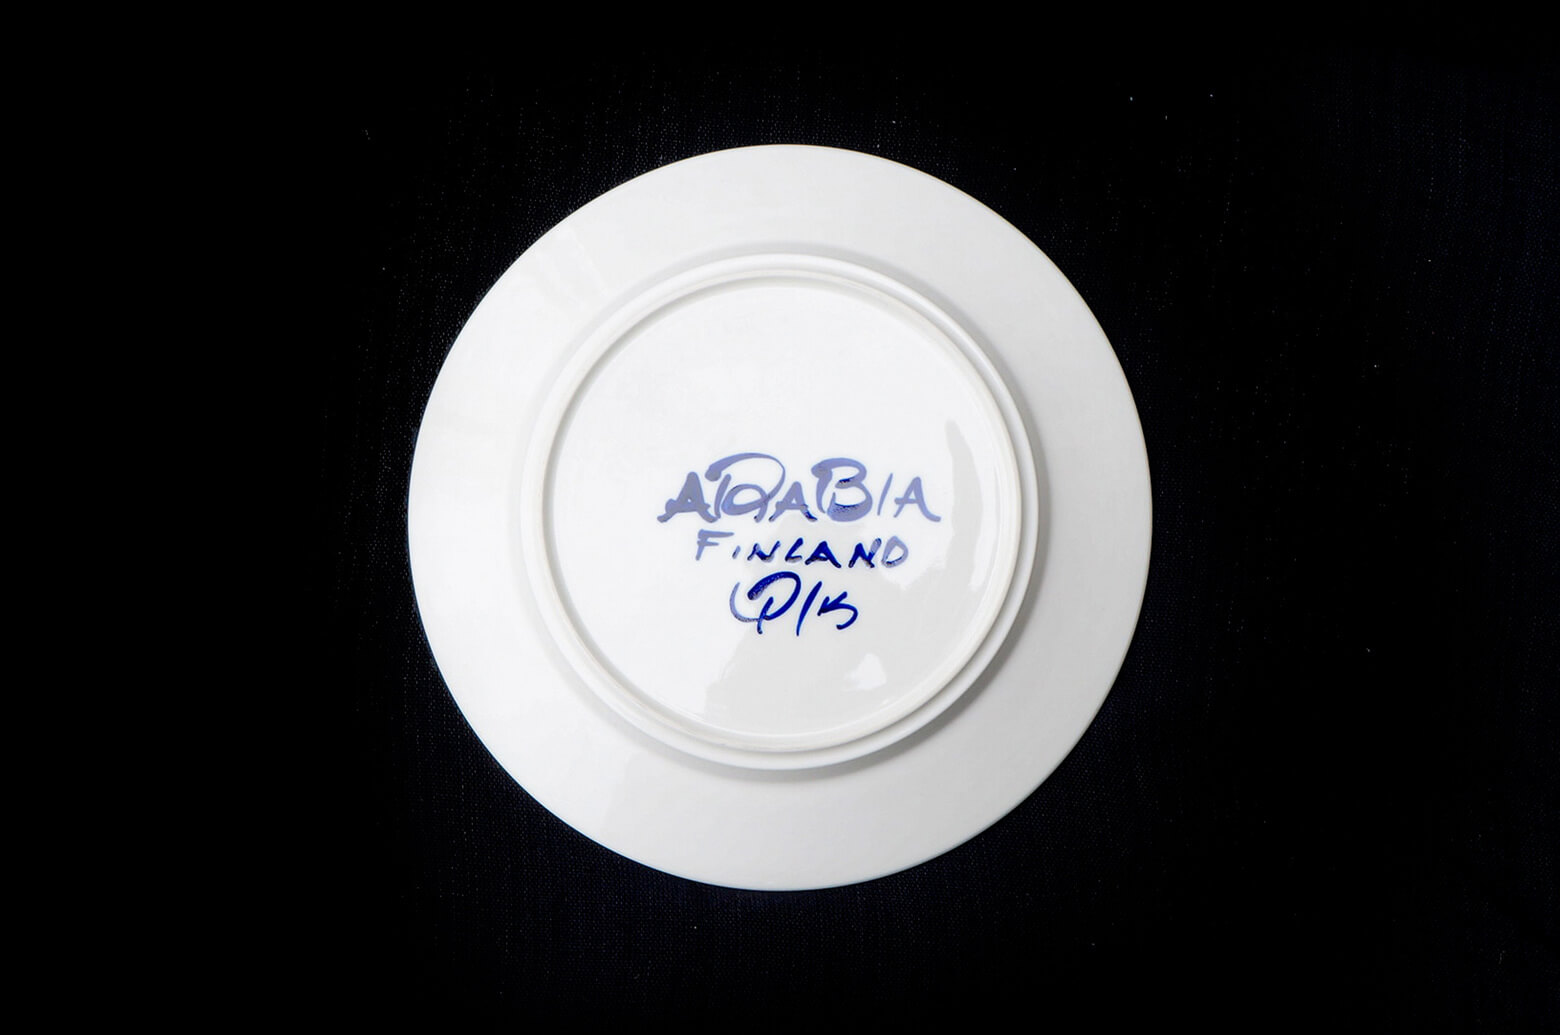 ARABIA Valencia Dinner Plate/アラビア バレンシア ディナープレート ウラ・プロコッペ 北欧食器 フィンランド ヴィンテージ 1